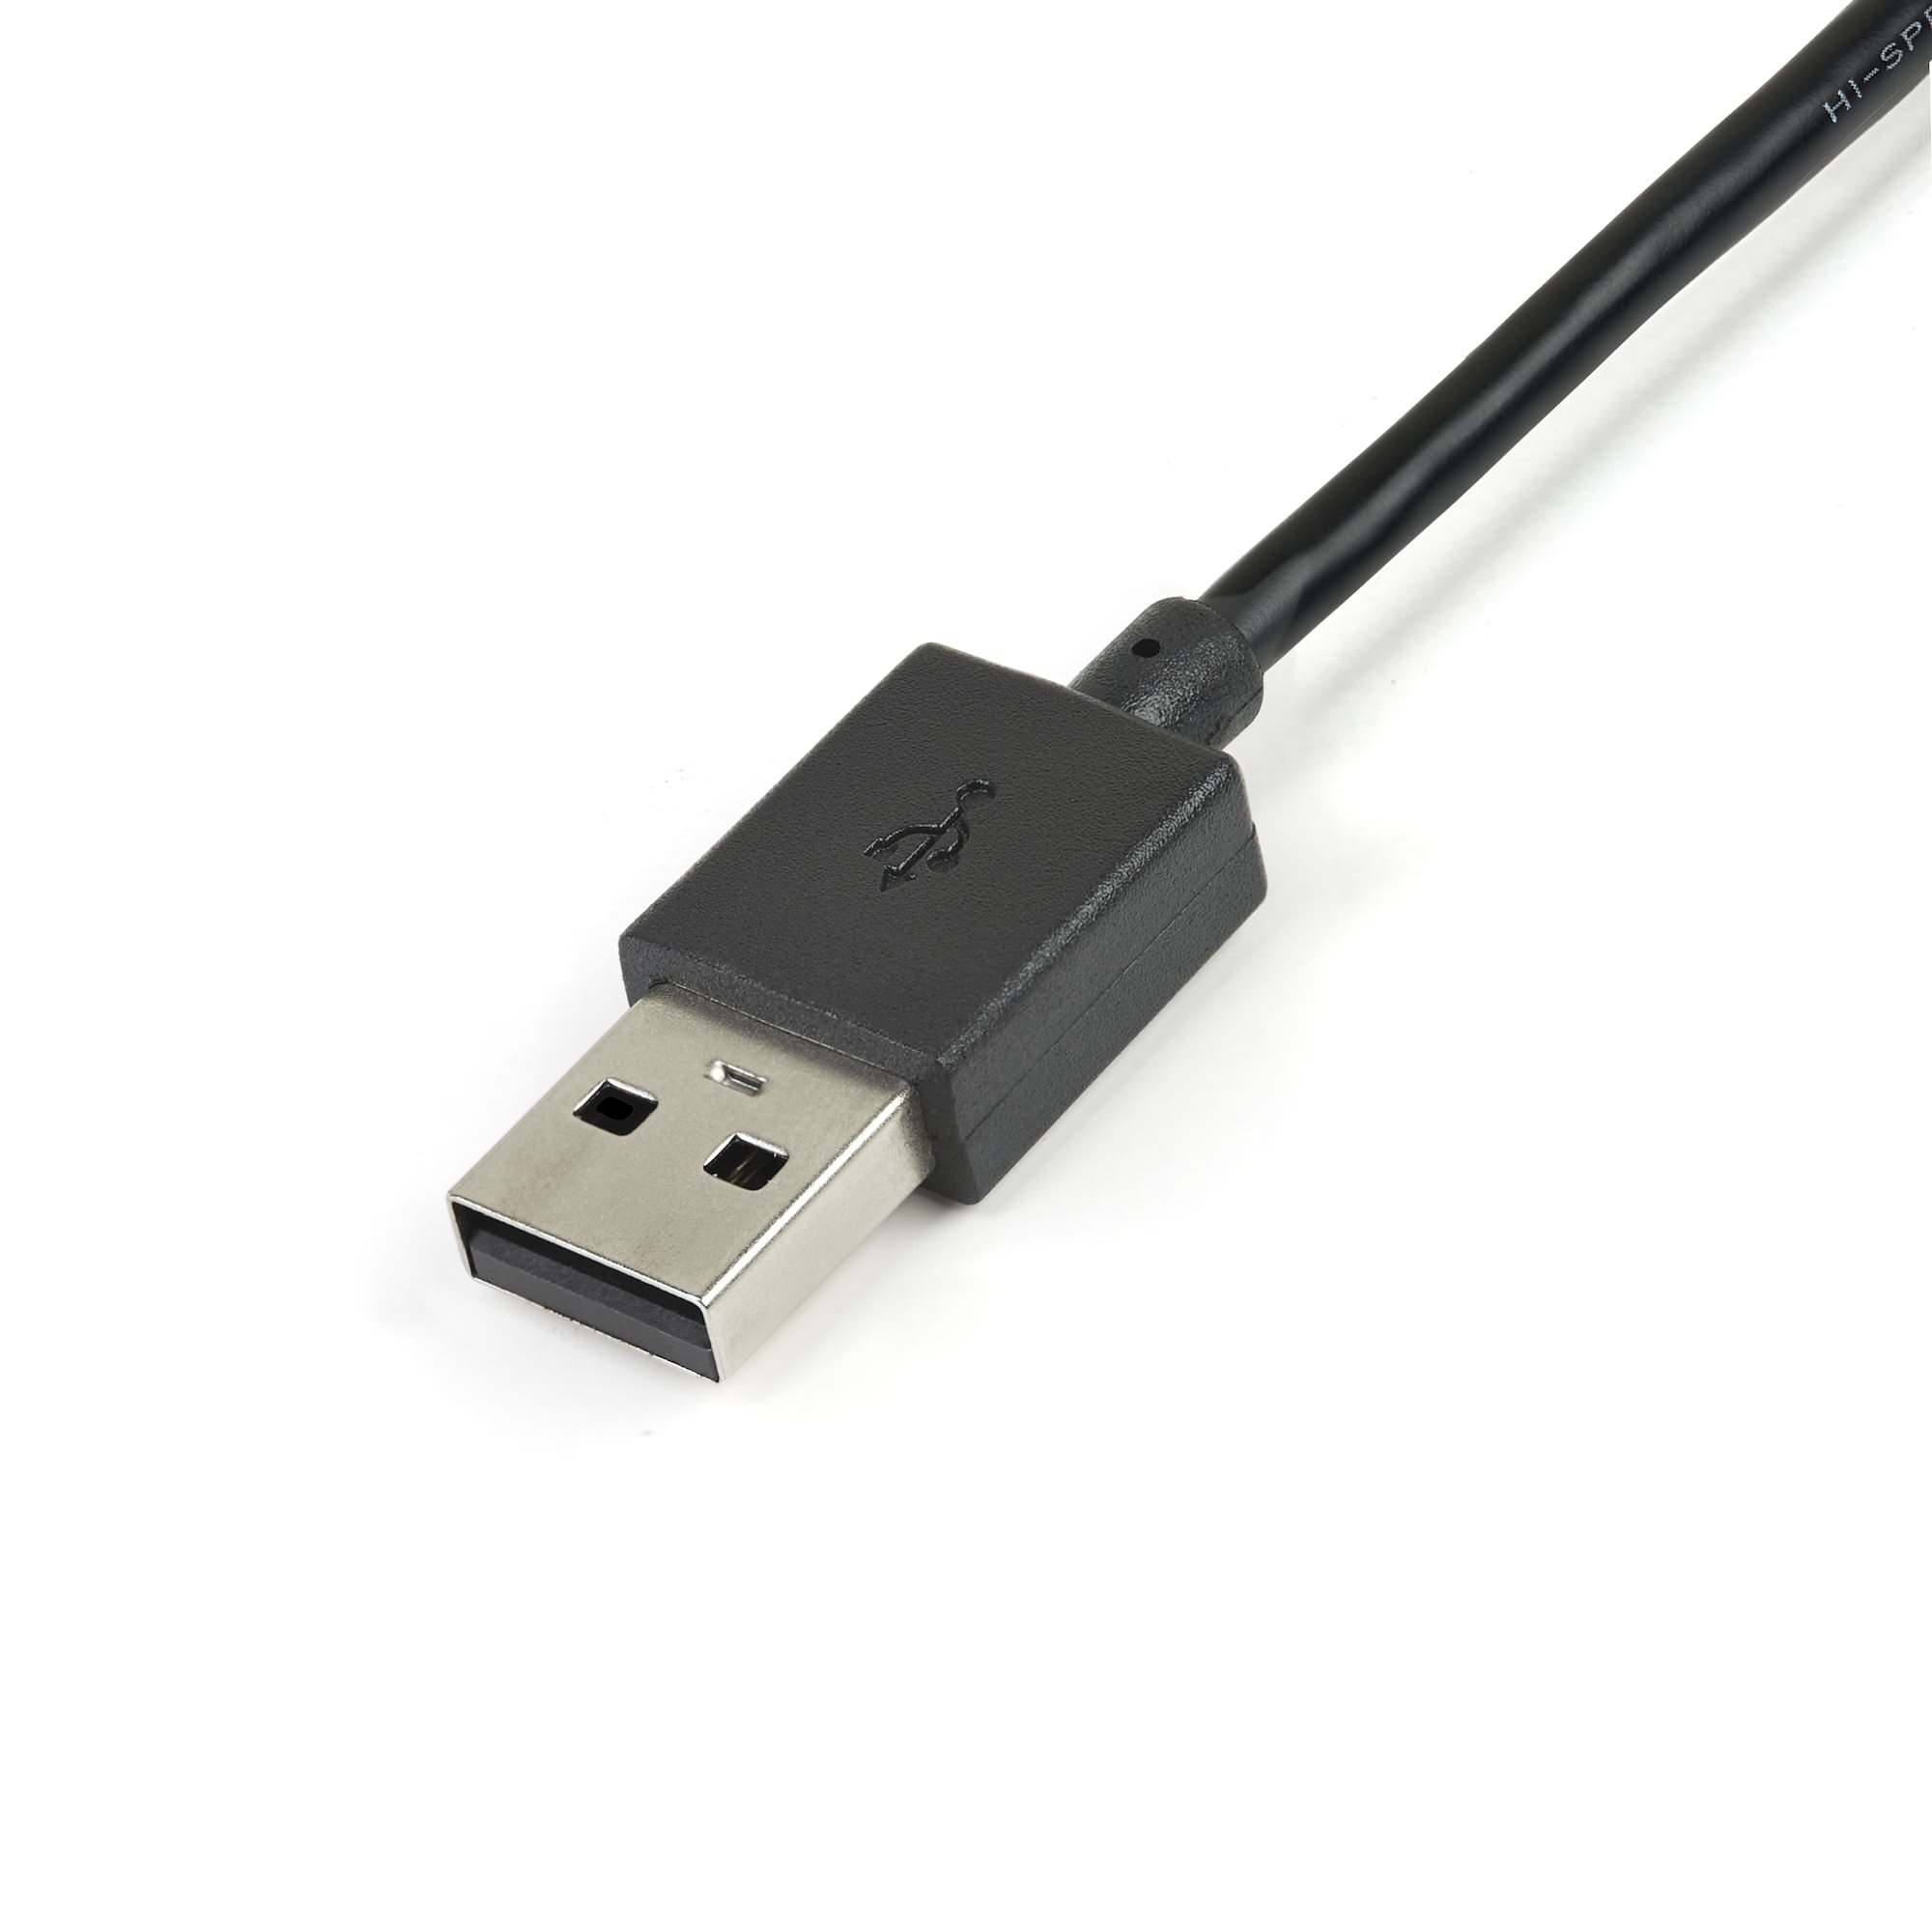 USB 2.0 - 10/100 Mbps Ethernet 有線LANアダプタ - USB  USB-C ネットワークアダプタ  日本